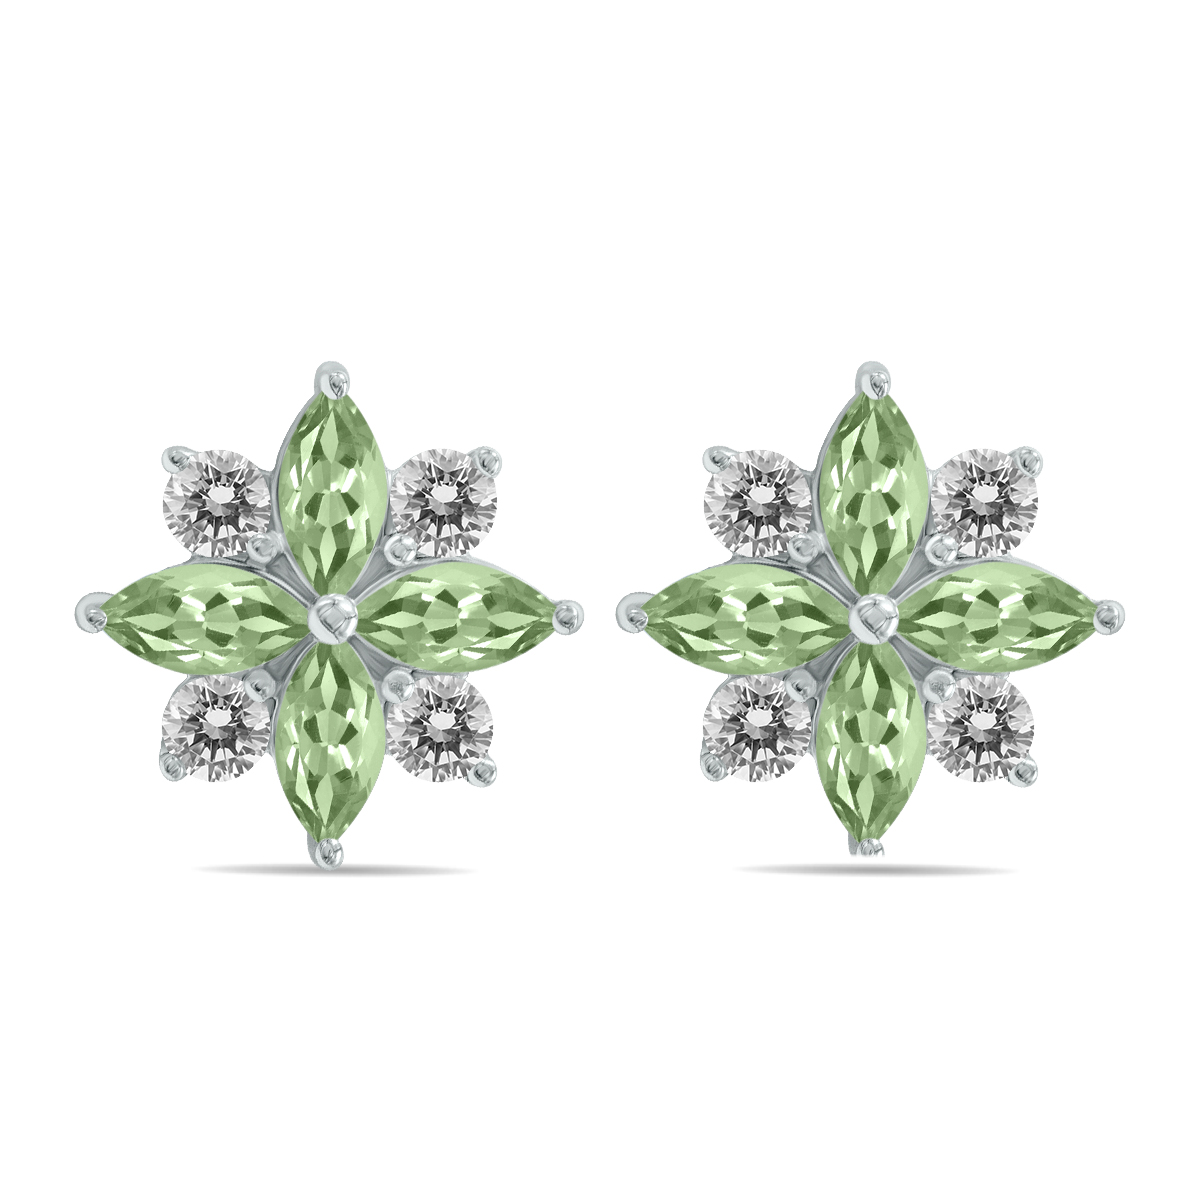 Image of 1 Carat TW Green Amethyst and Diamond Flower Earrings in 10K White Gold